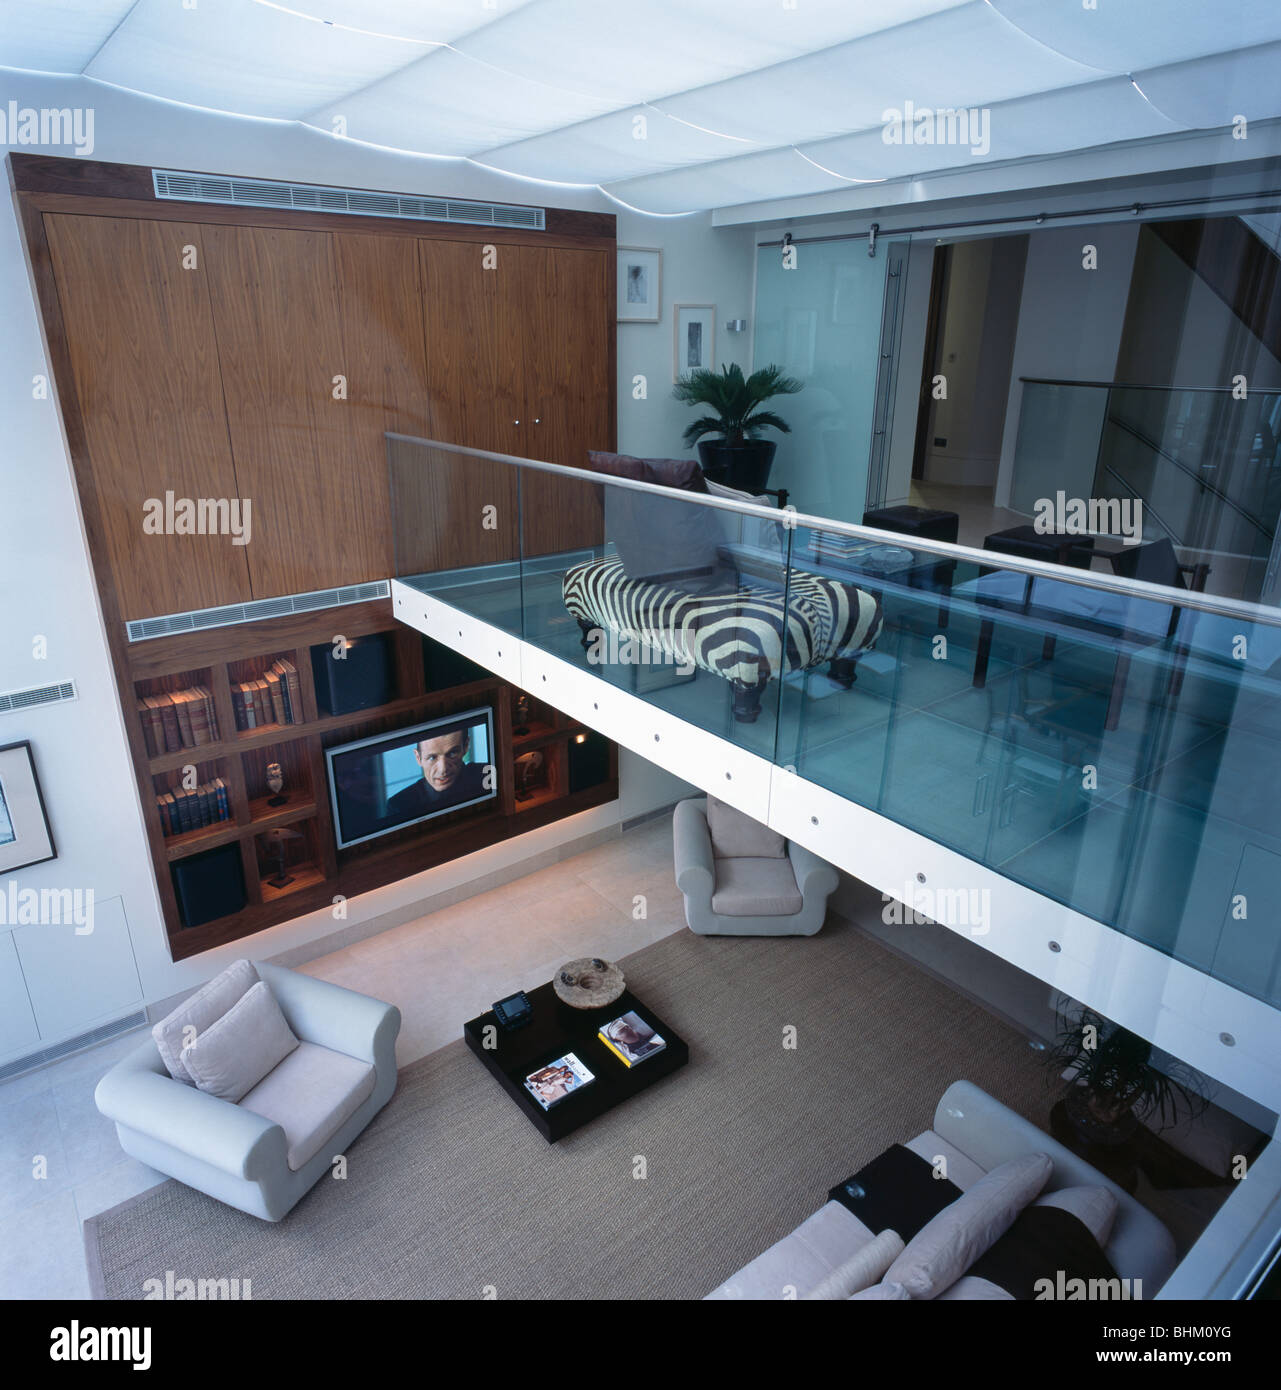 Birdseye View Of Large Open Plan Mezzanine Floor With Glass Half